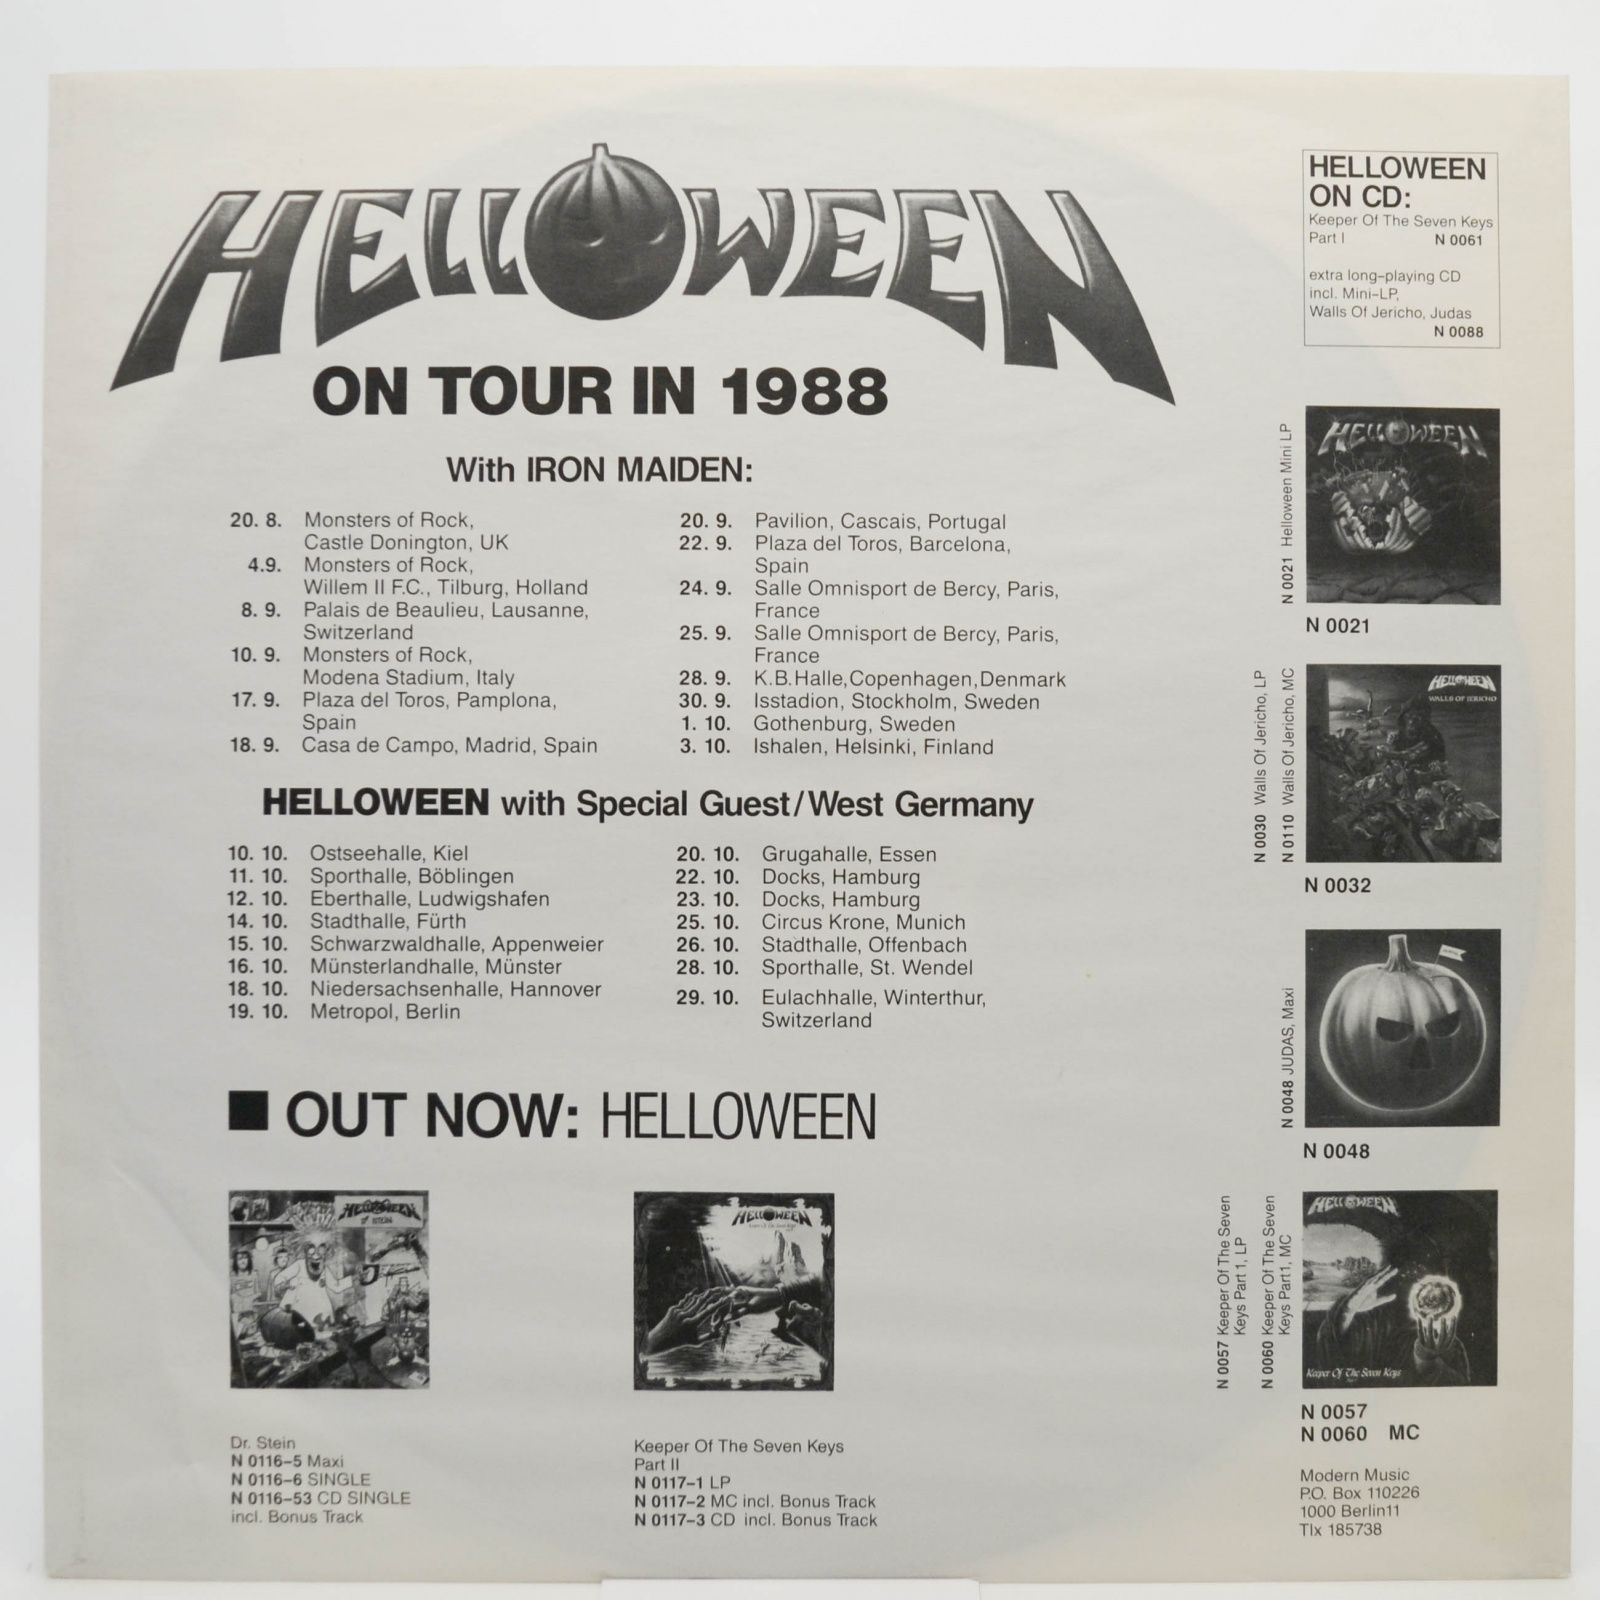 Helloween — Keeper Of The Seven Keys - Part II, 1988